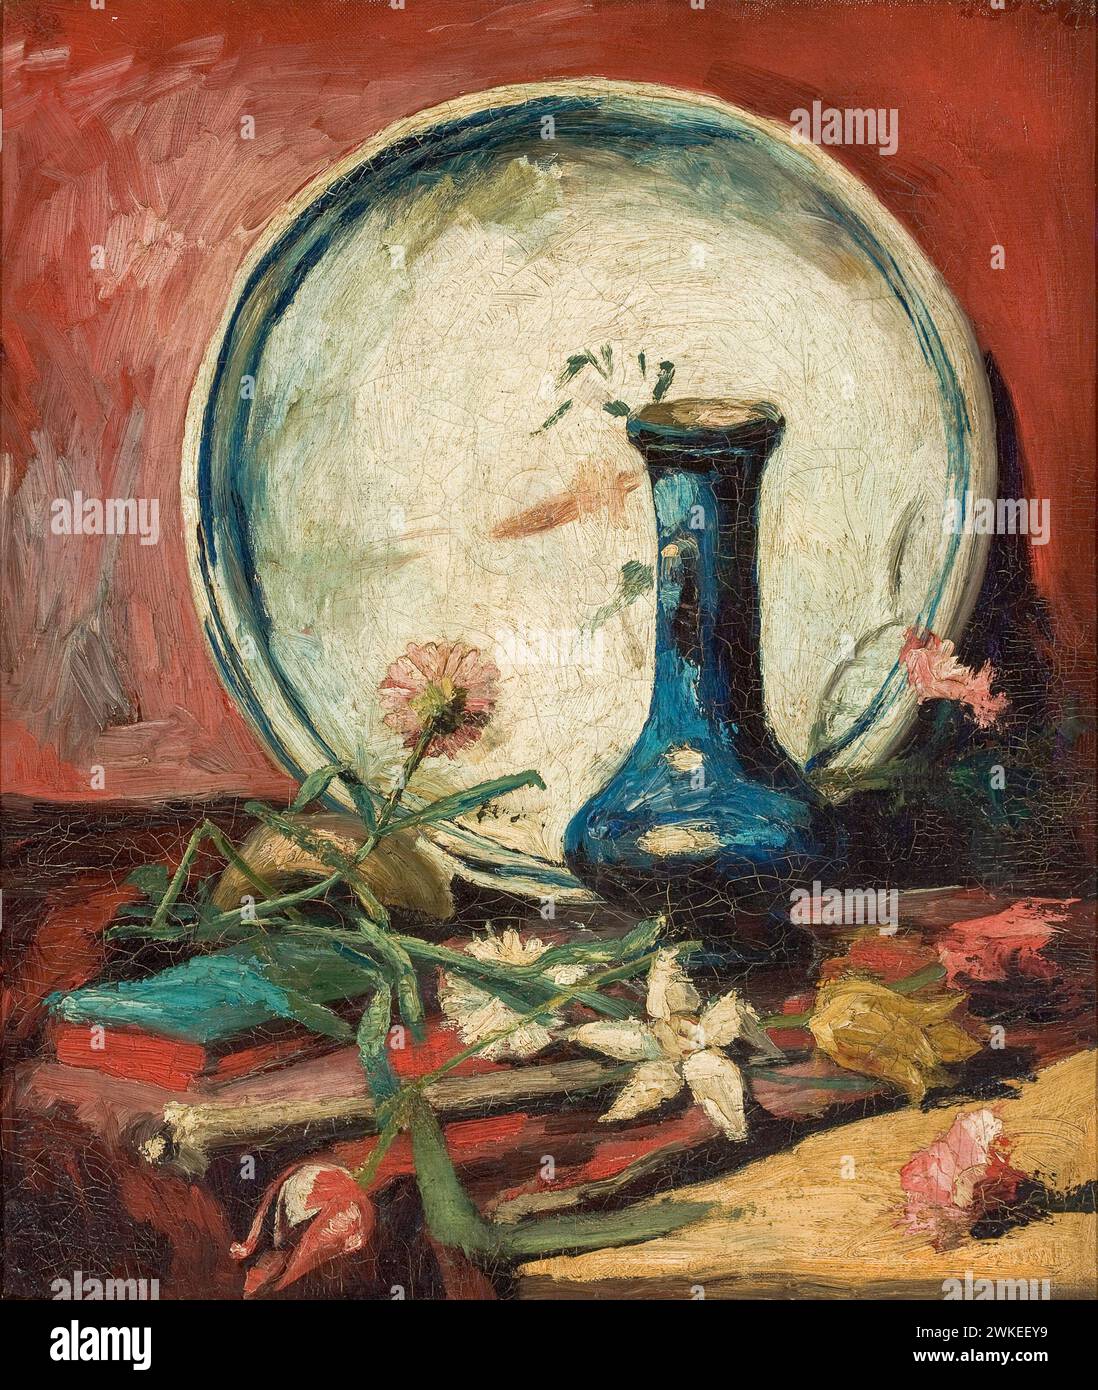 Still Life with Plate, Vase and Flowers. Museum: Museu de Arte de São Paulo. Author: VINCENT VAN GOGH. Stock Photo